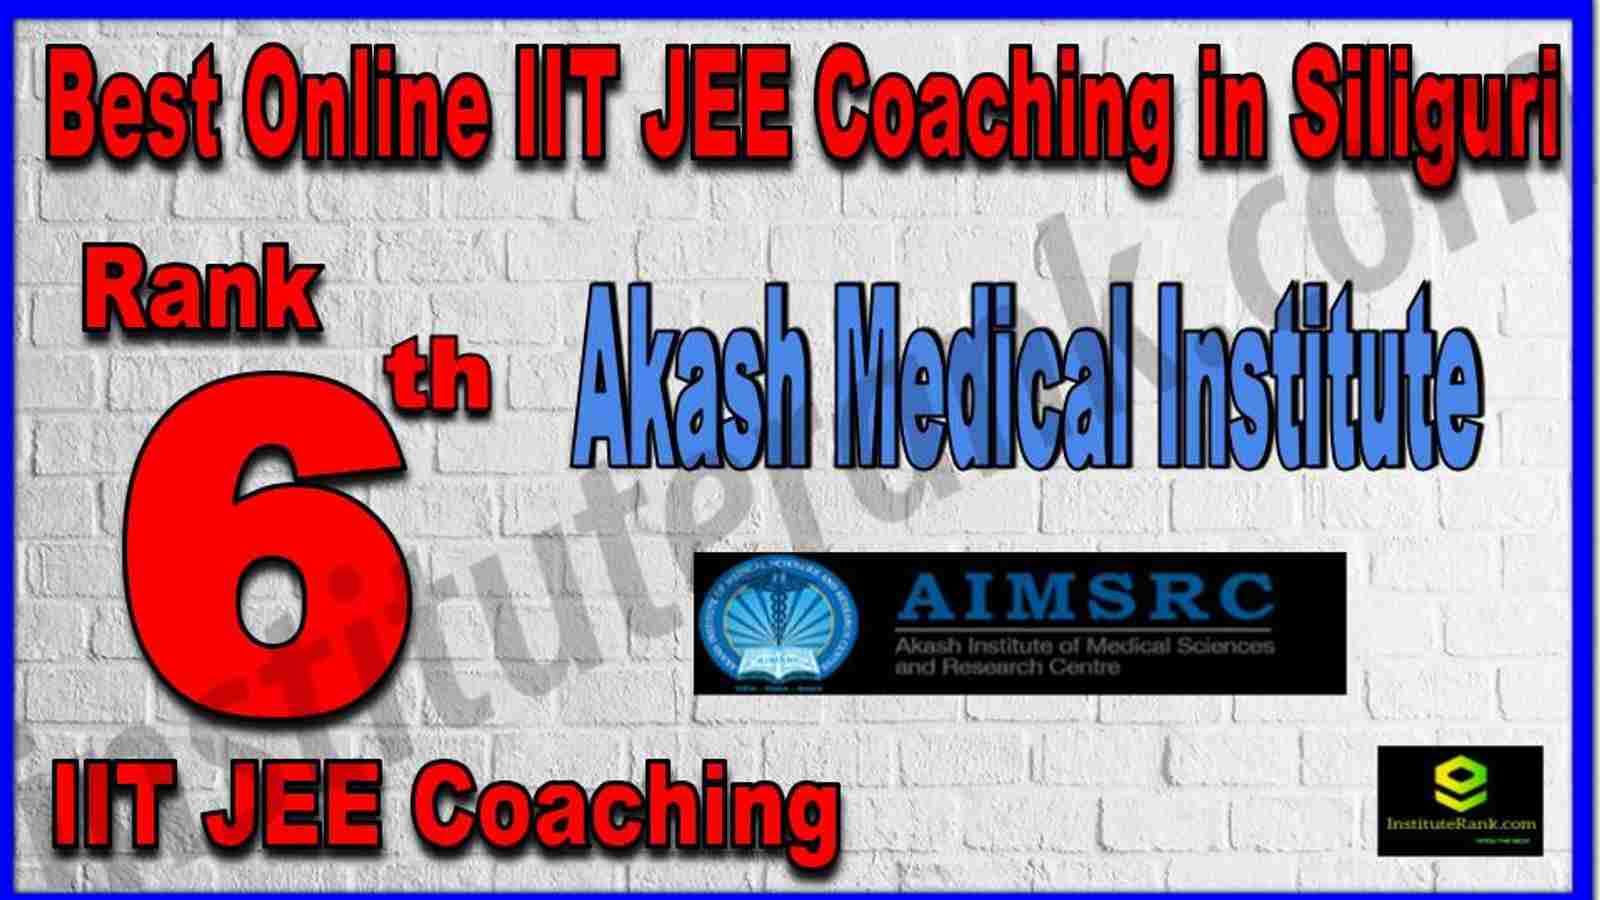 Rank 6th Best Online IIT-JEE Coaching in Siliguri